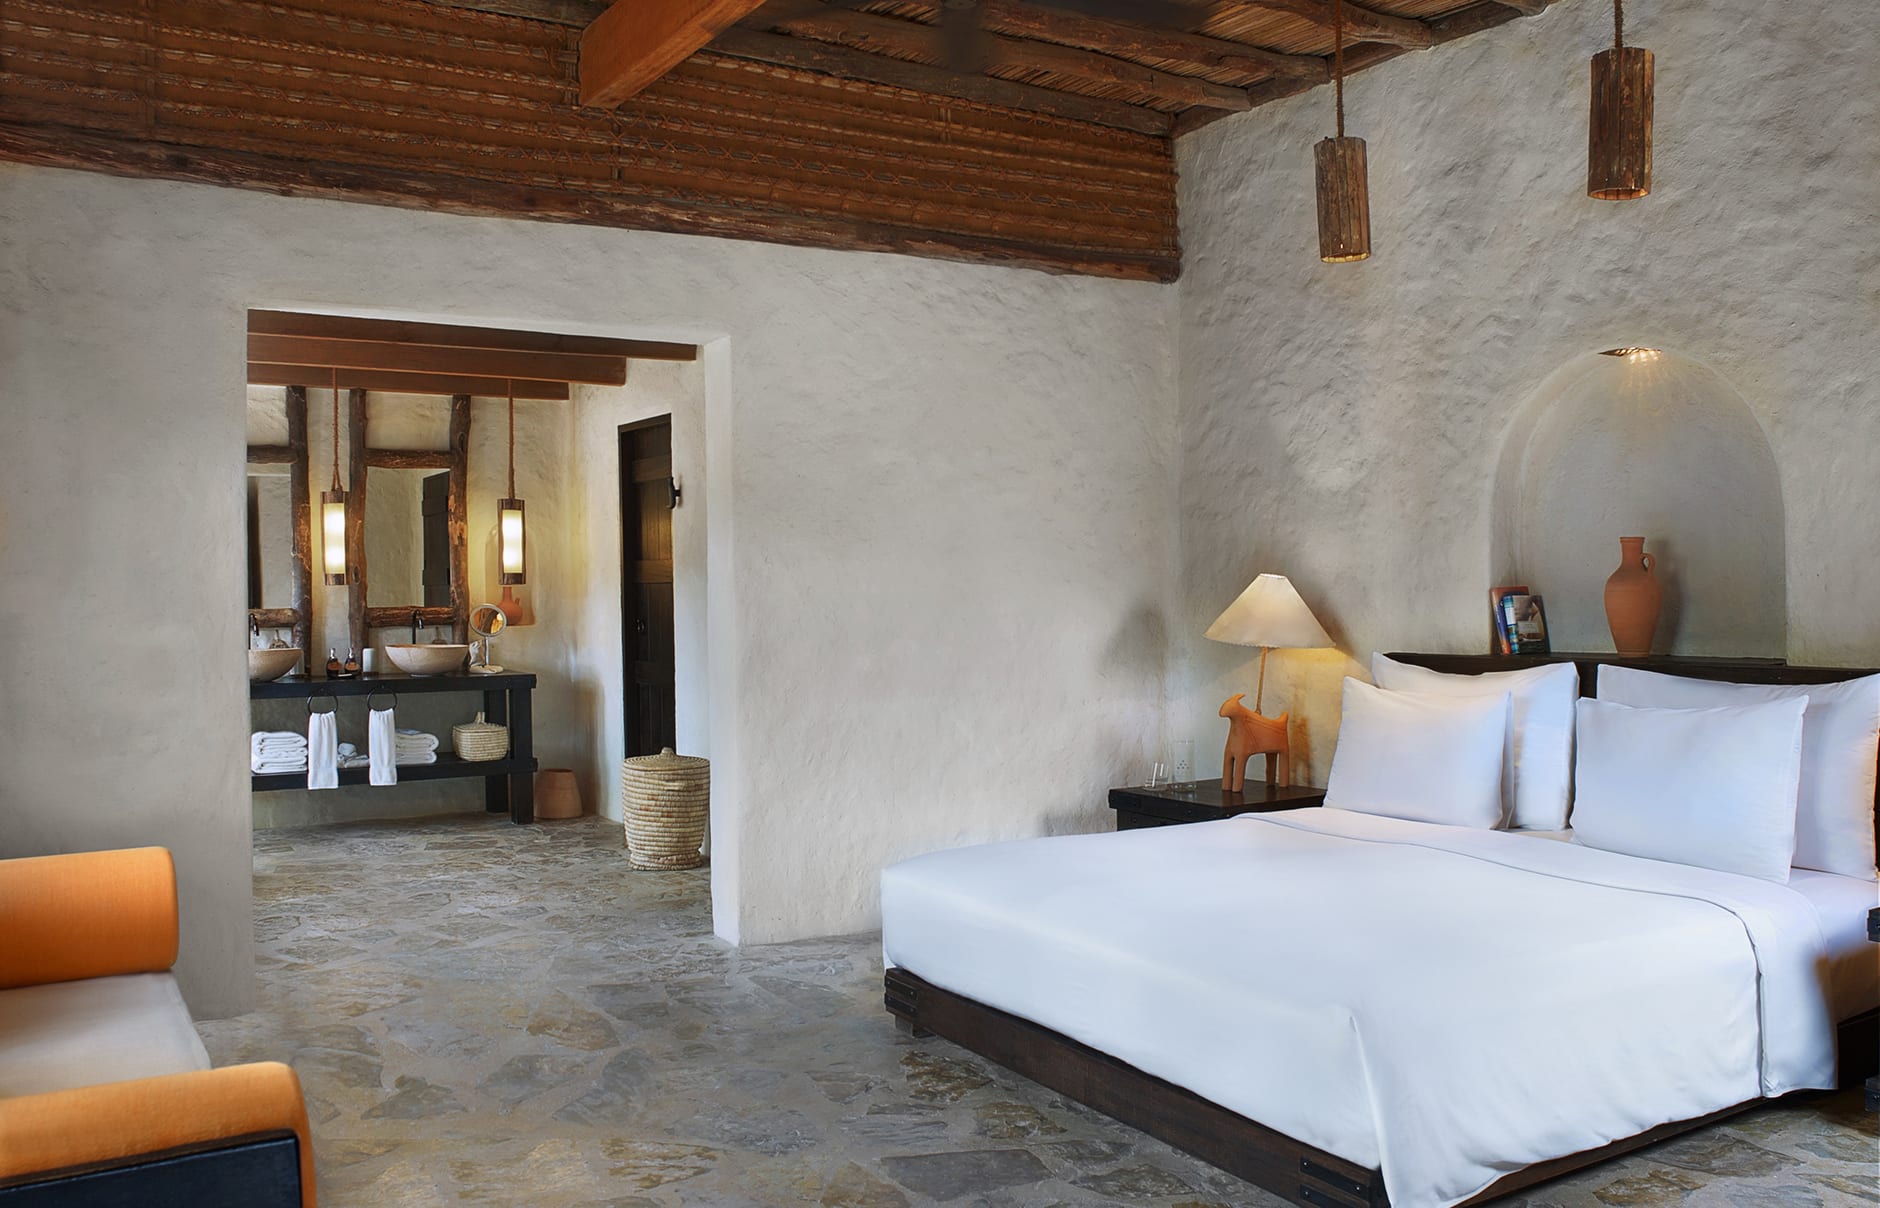 Six Senses Zighy Bay, Musandam Peninsula, Oman. Luxury Hotel Review by TravelPlusStyle. Photo © Six Senses